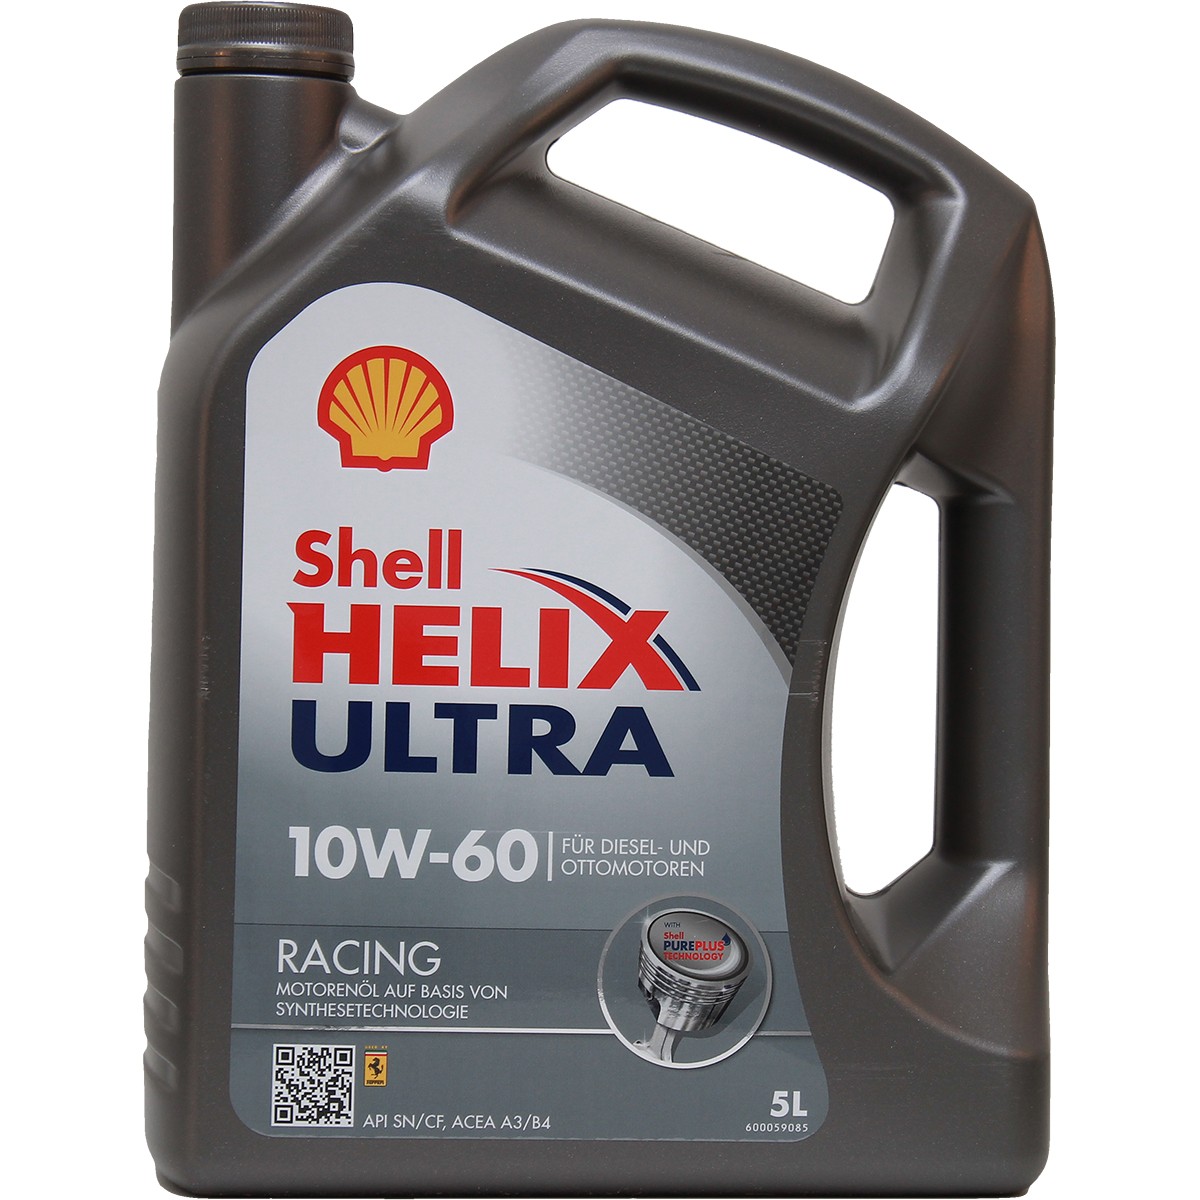 Car oil SHELL 10W-60, 5l, Full Synthetic Oil longlife 550040761